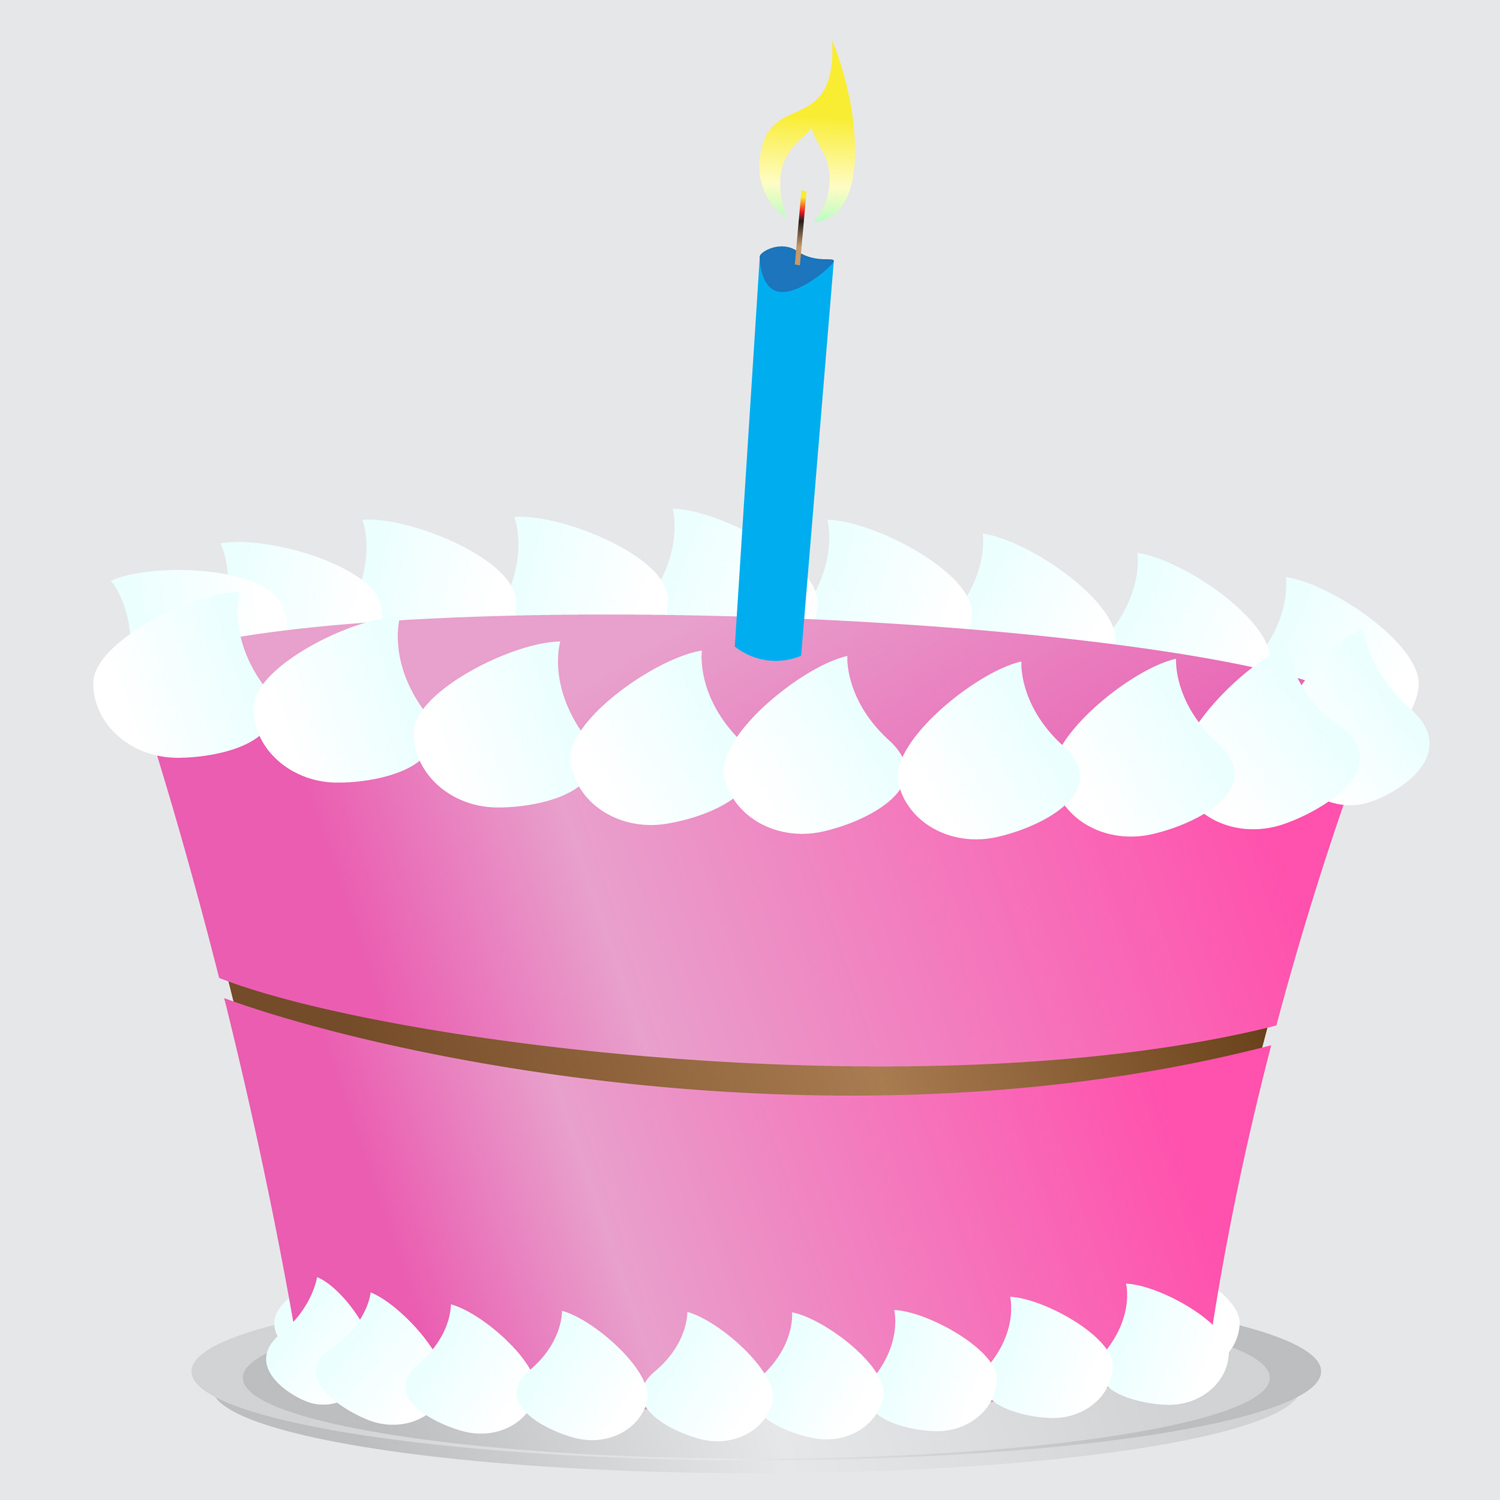 Pink Birthday Cake Clipart